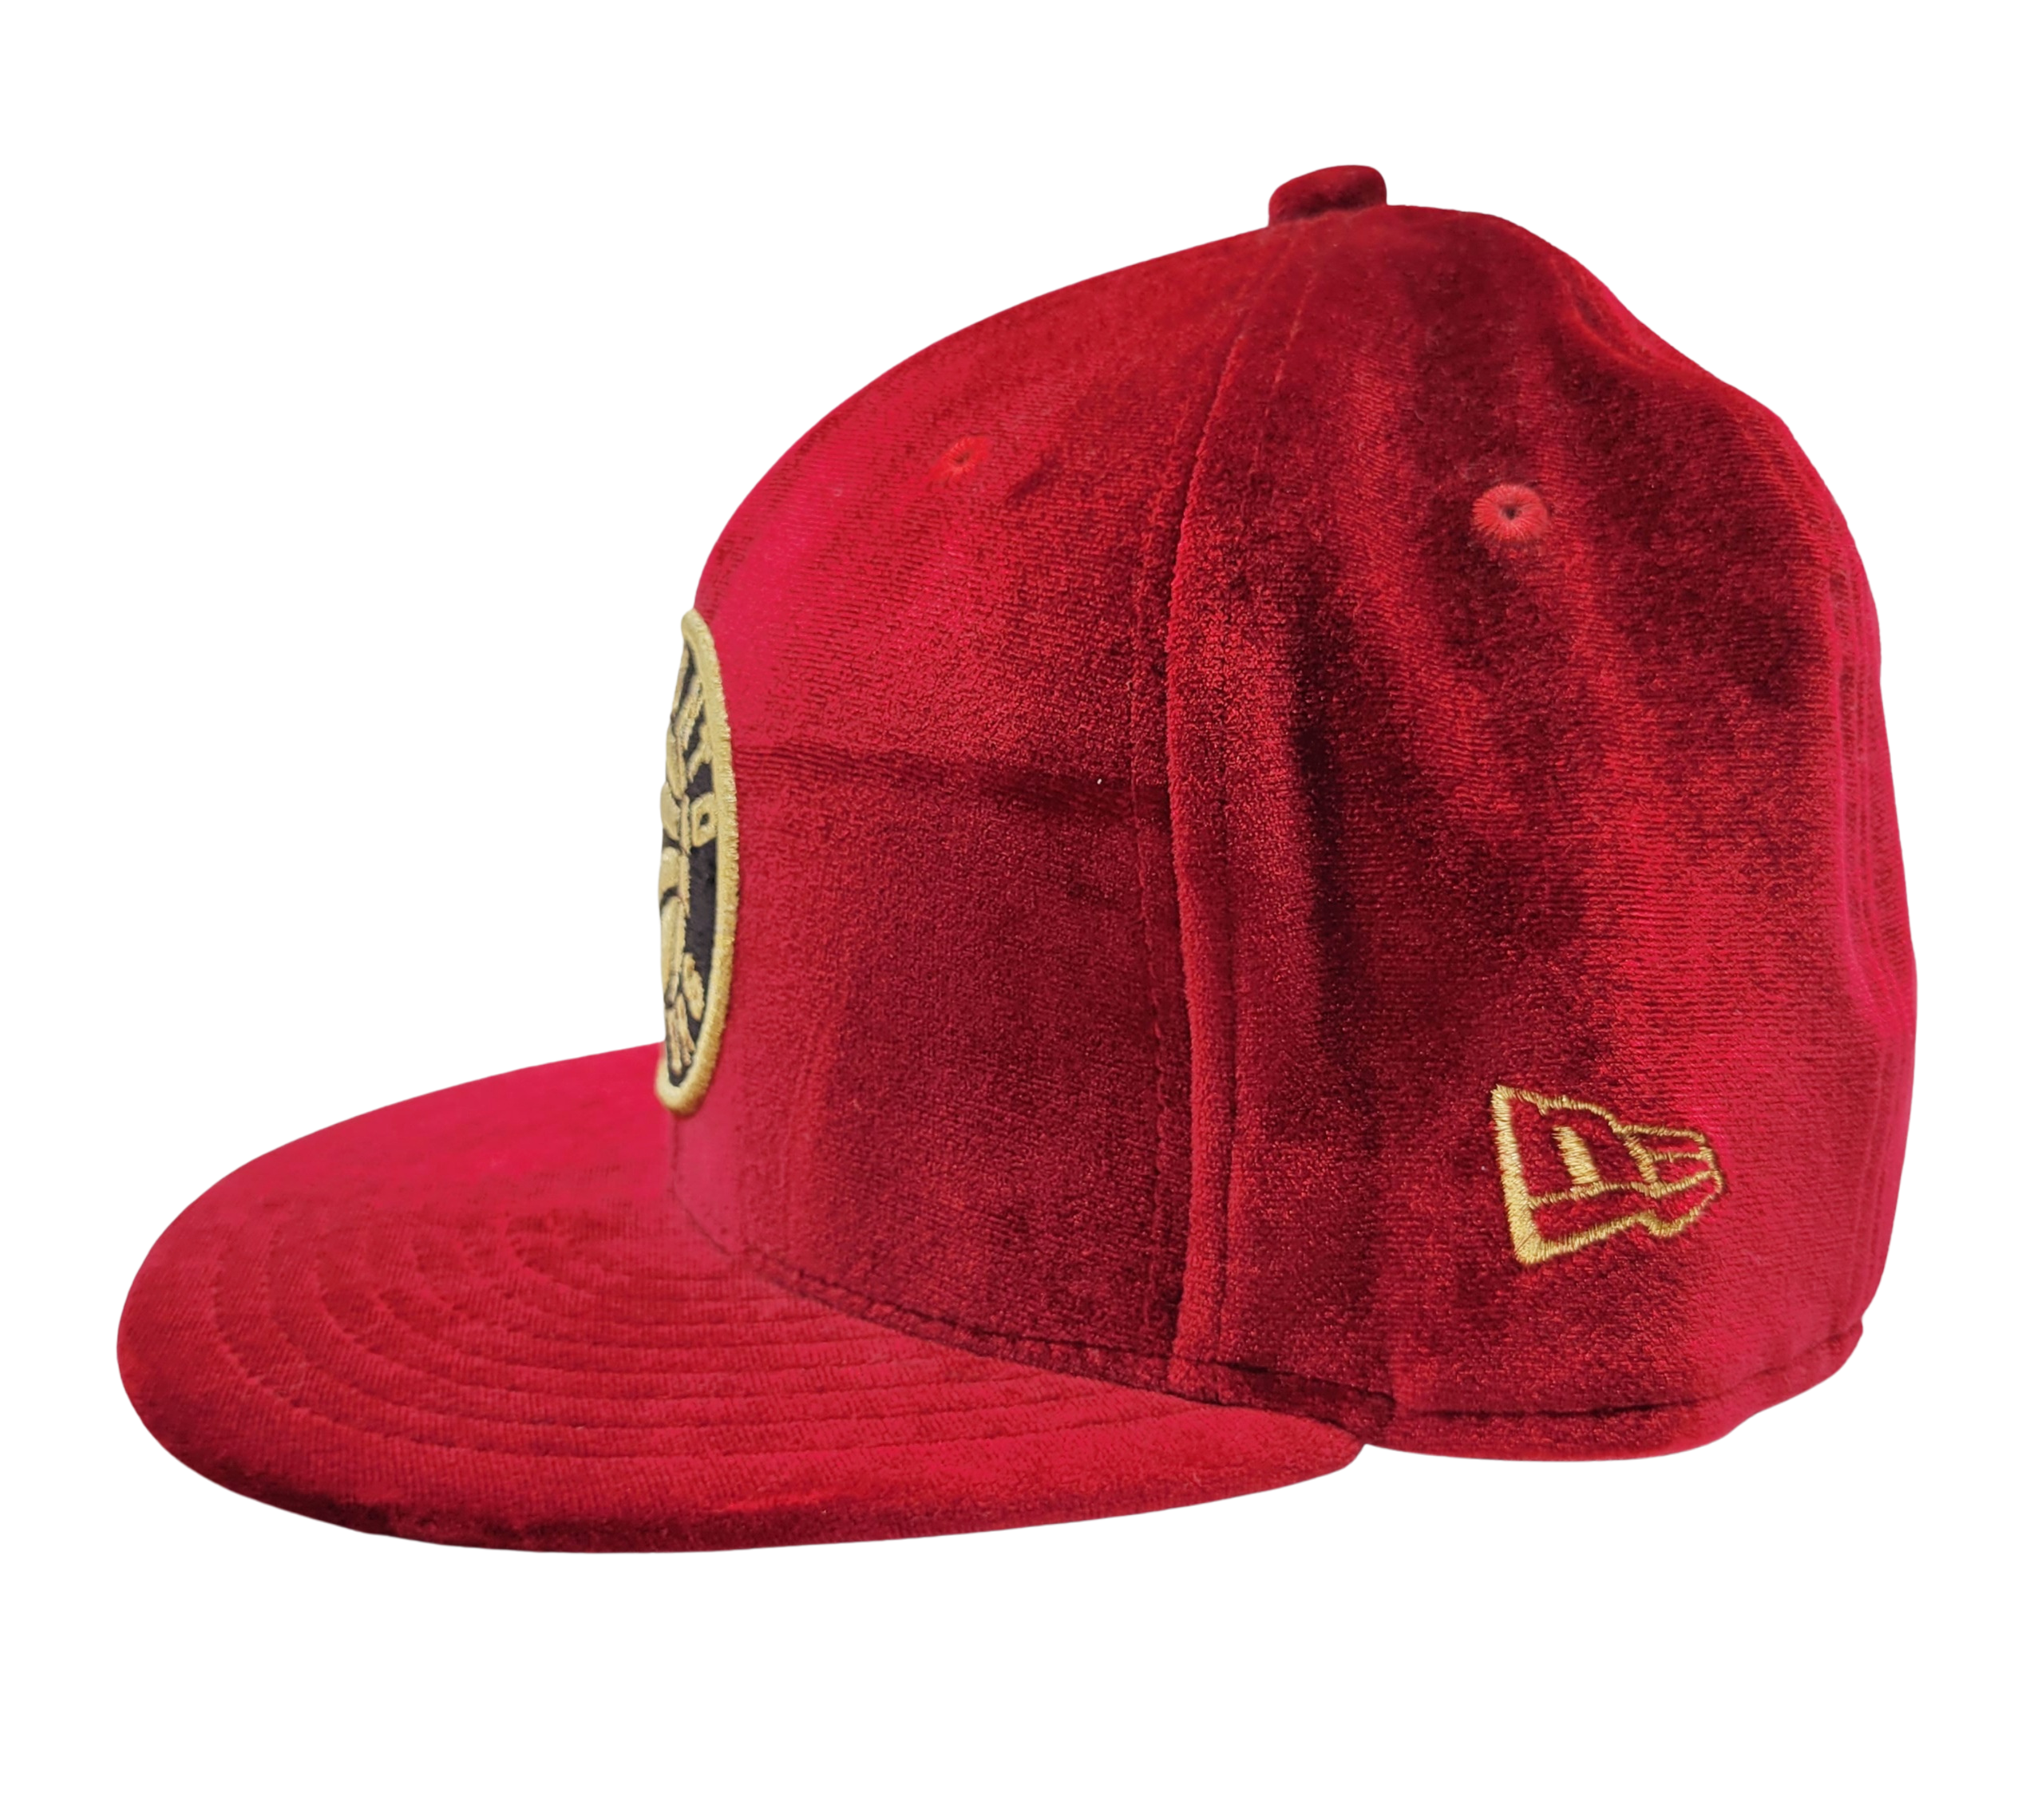 MEN'S TORONTO RAPTORS 5950 FITTED GOLD/BLACK LOGO ON RED VELOUR HAT